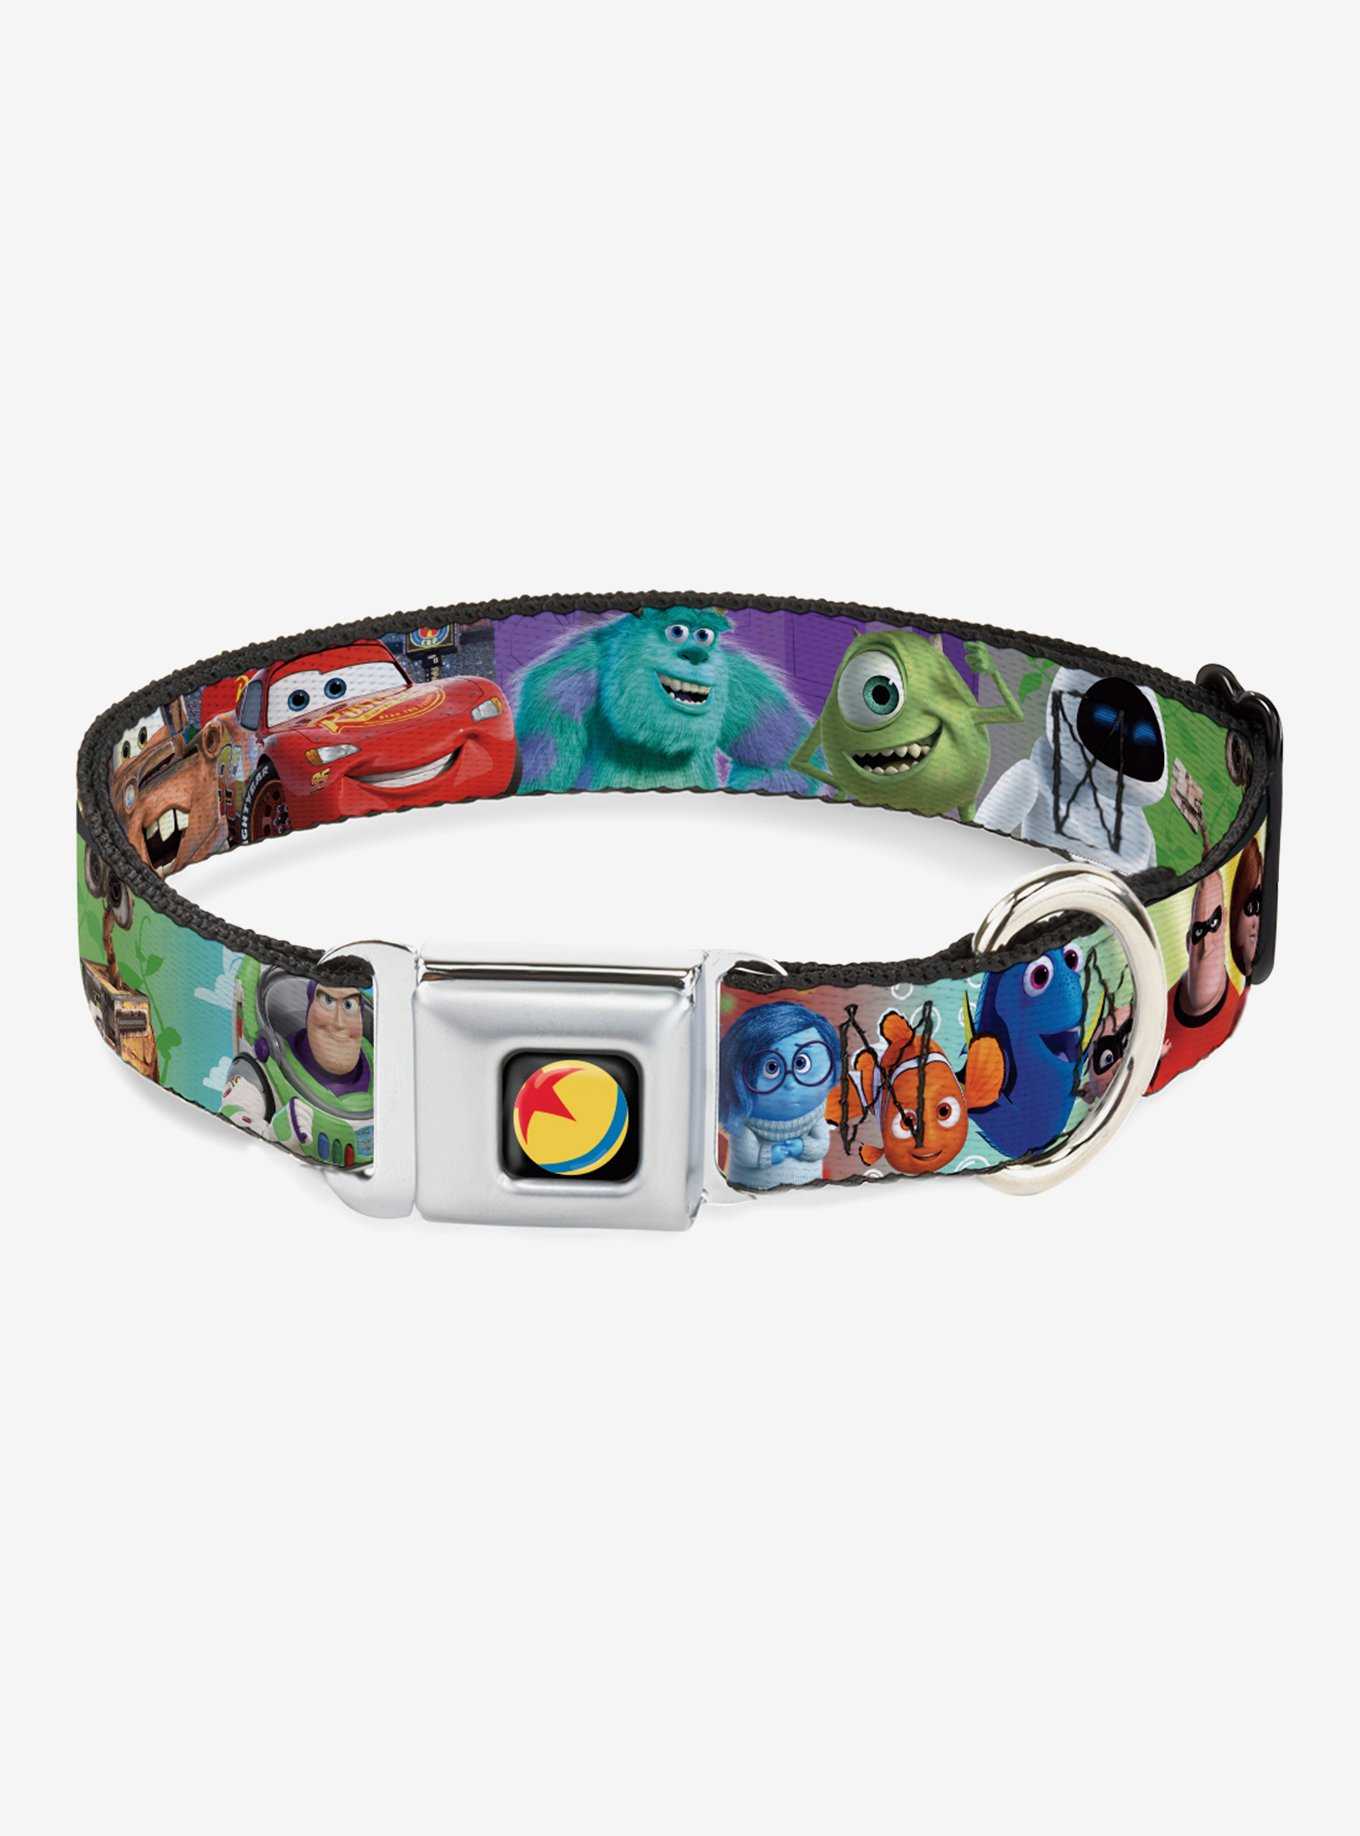 Disney Pixar 7 Movie Character Collage Seatbelt Buckle Dog Collar, , hi-res